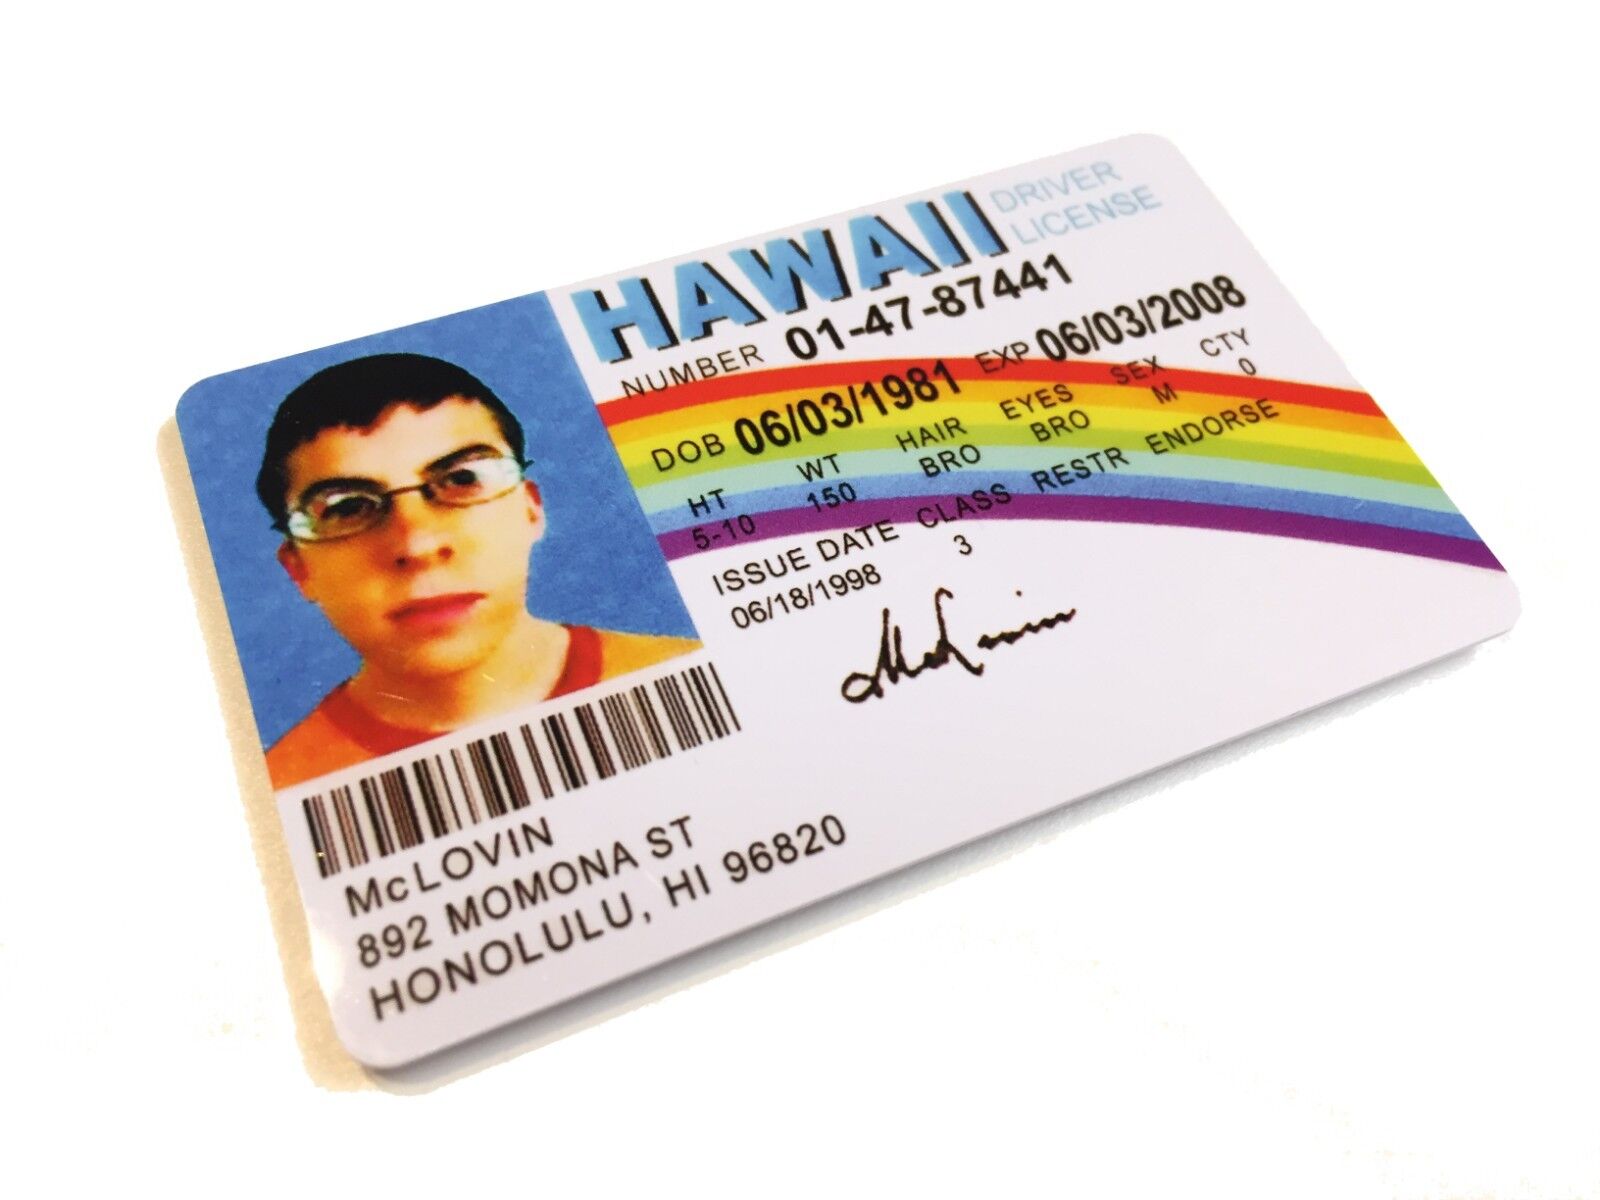 McLovin SUPERBAD Plastic ID Card - Film Novelty Prop